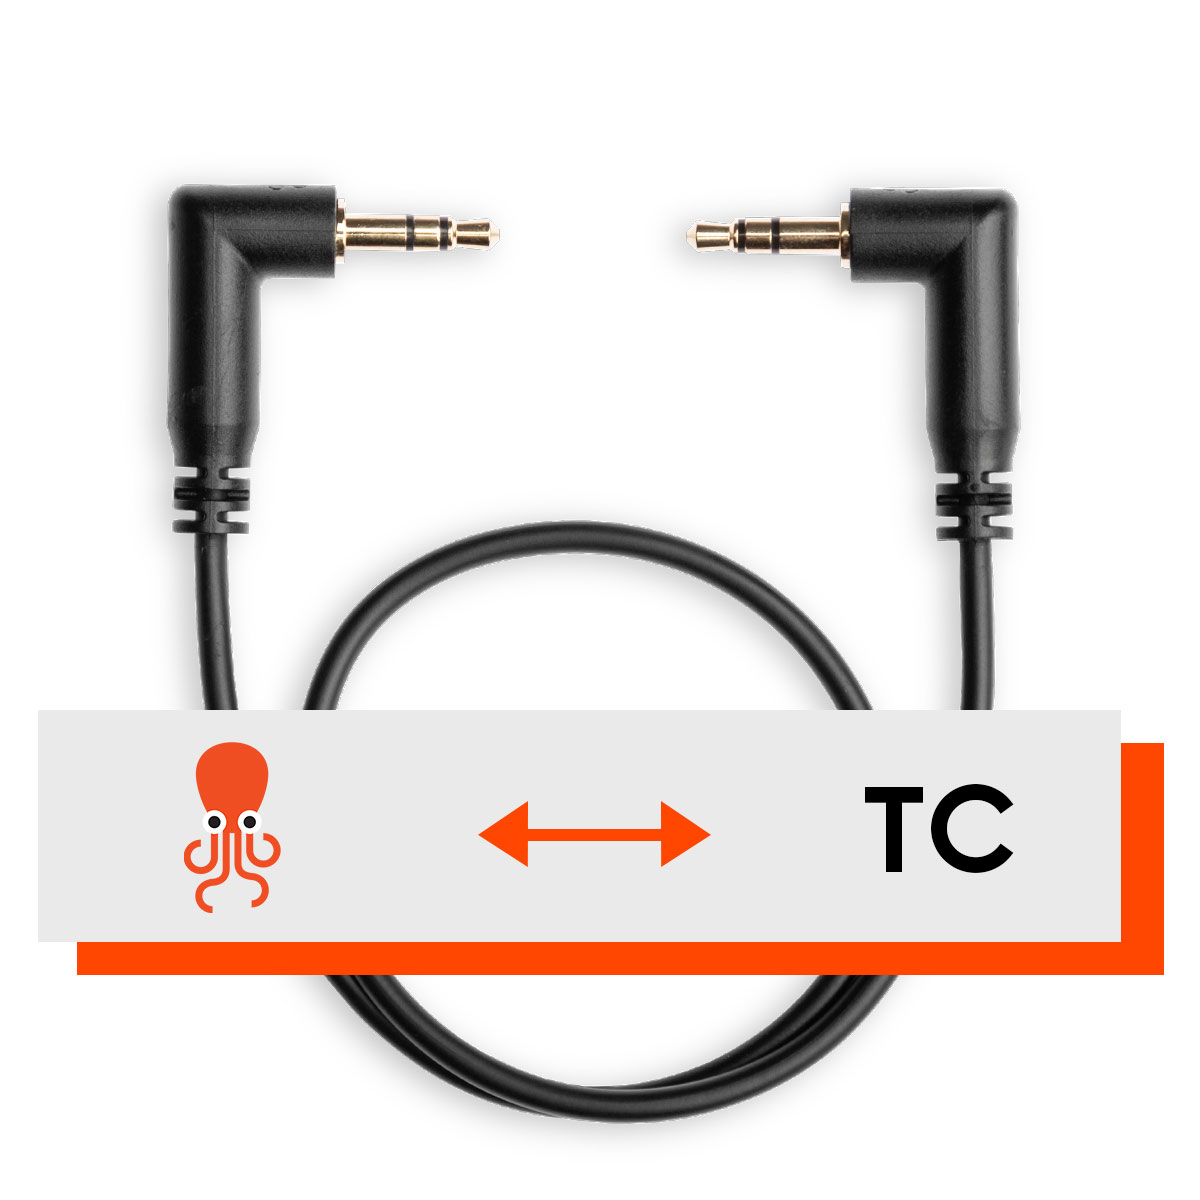 schetsen Correspondentie Vlieger Tentacle to DSLR cable | Tentacle Sync Shop